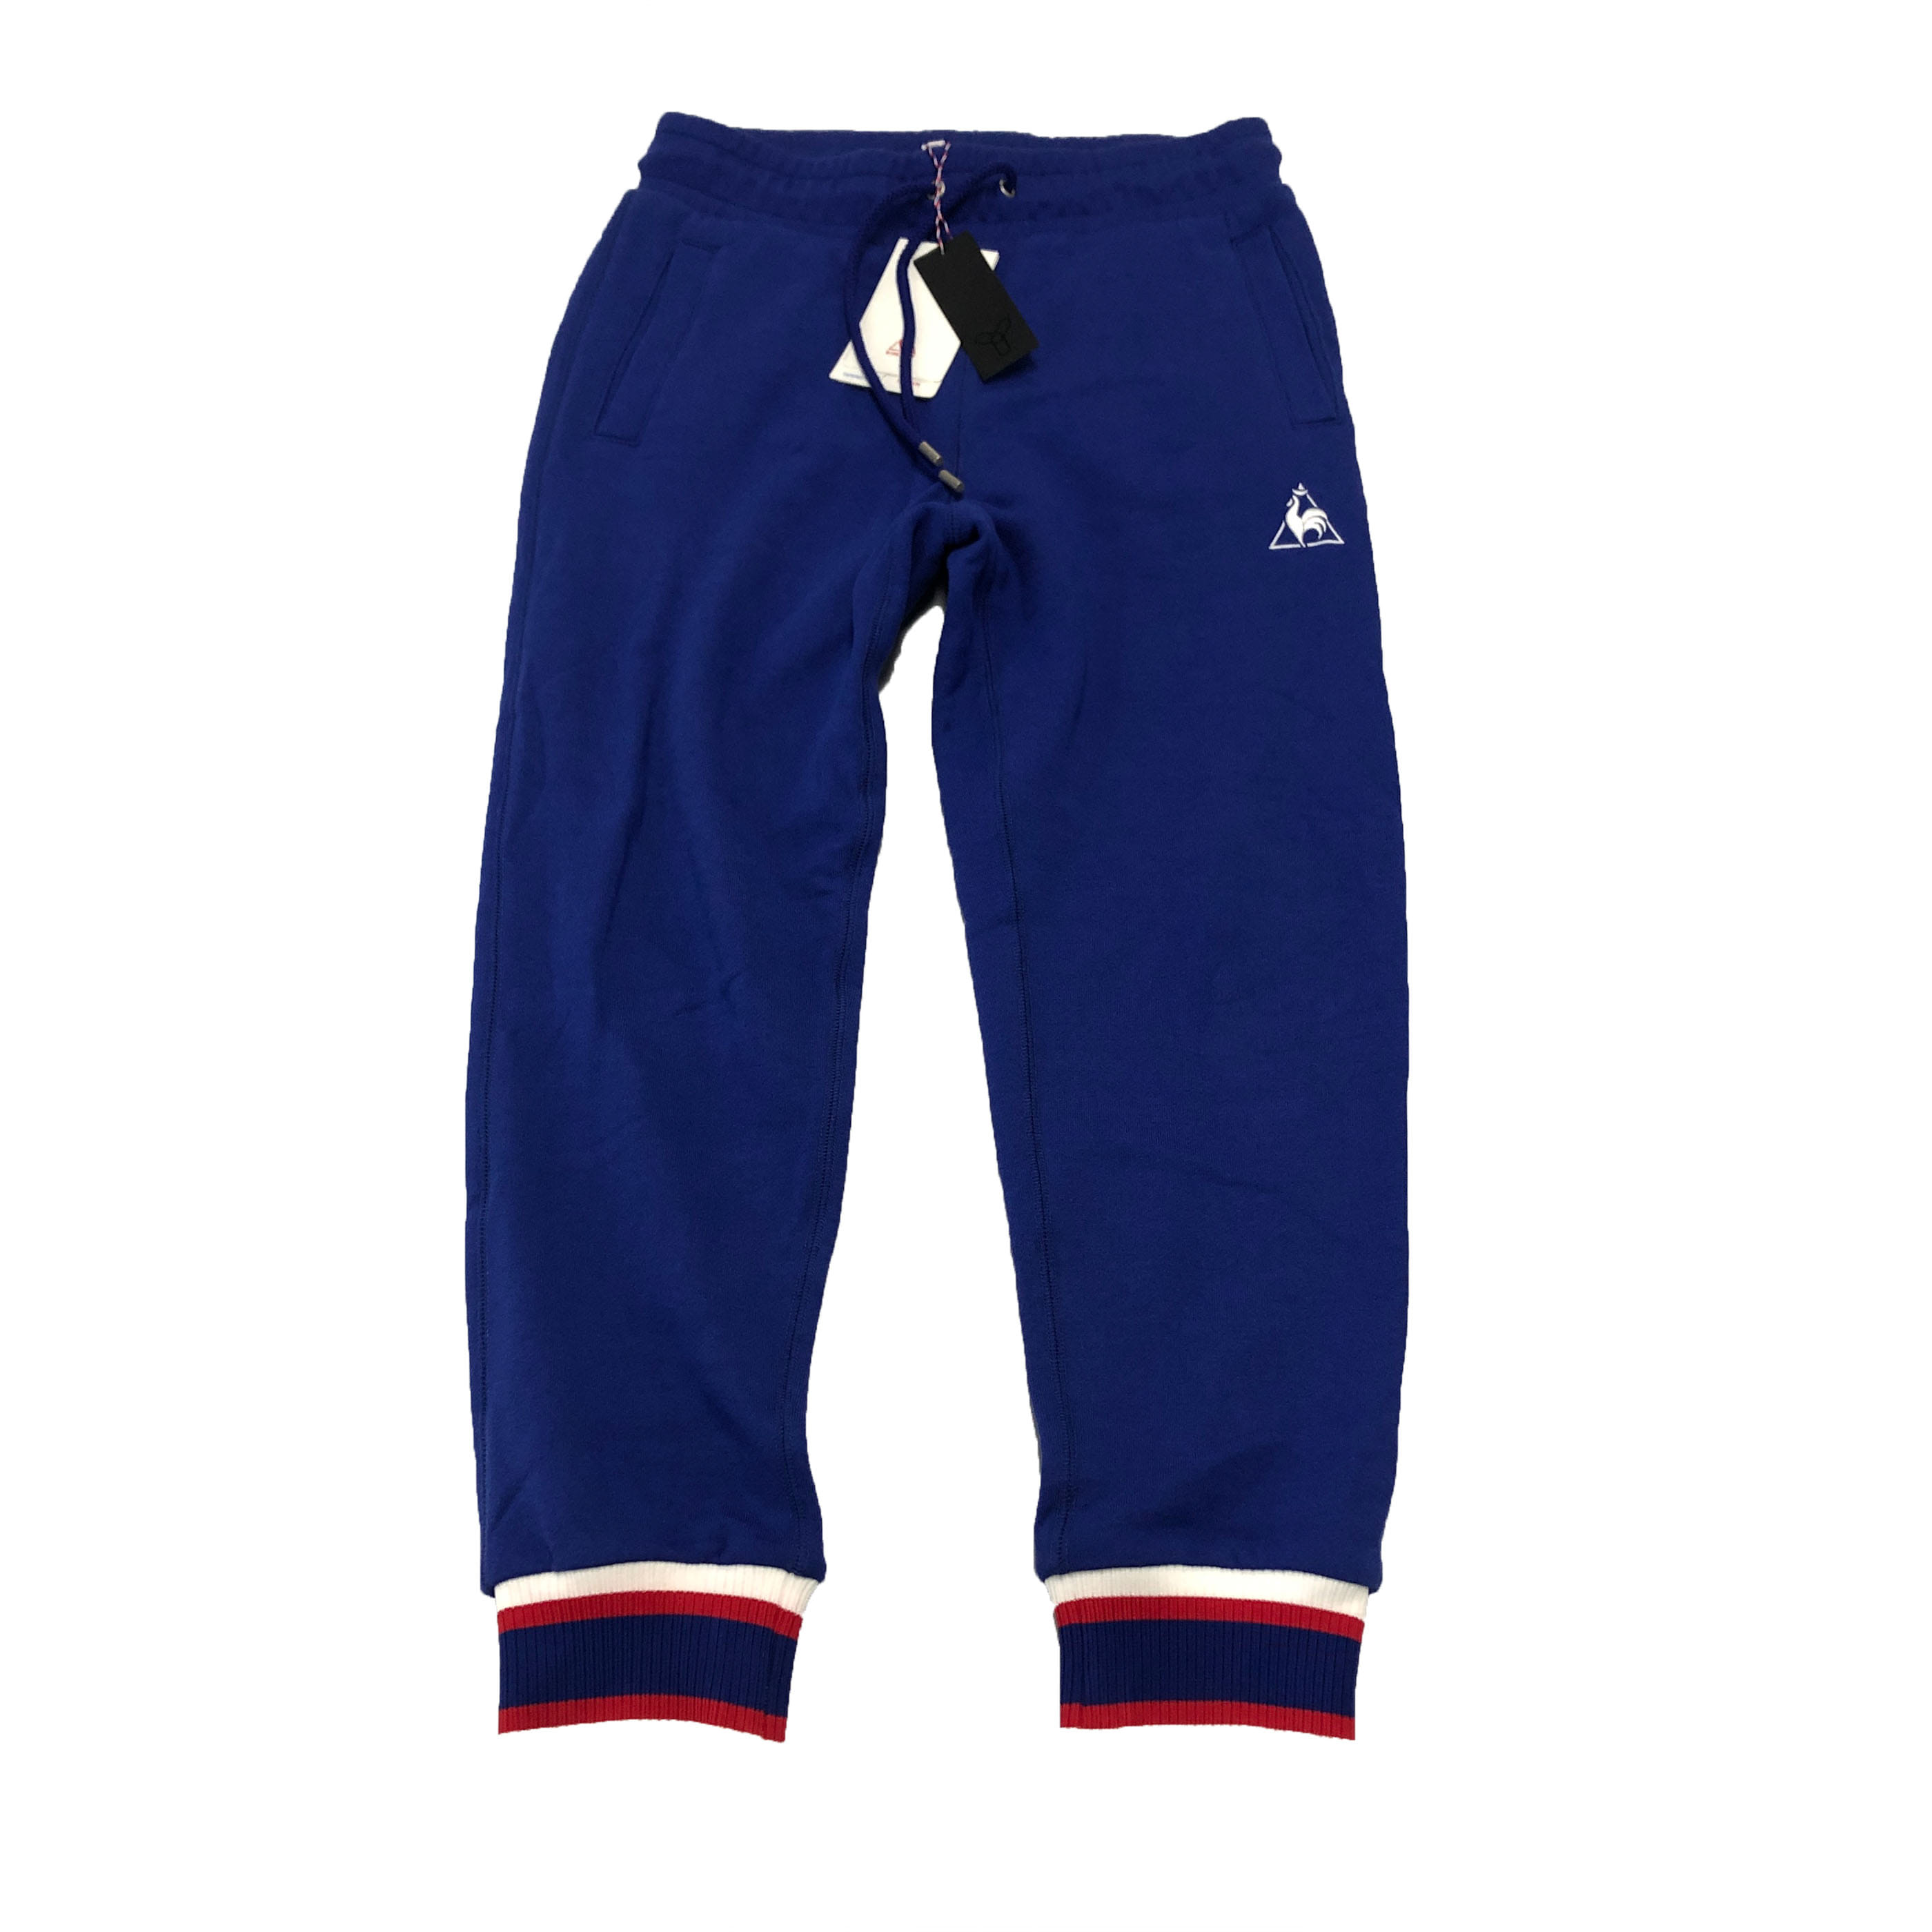 [Lecoq] Track Pants Blue - Size M